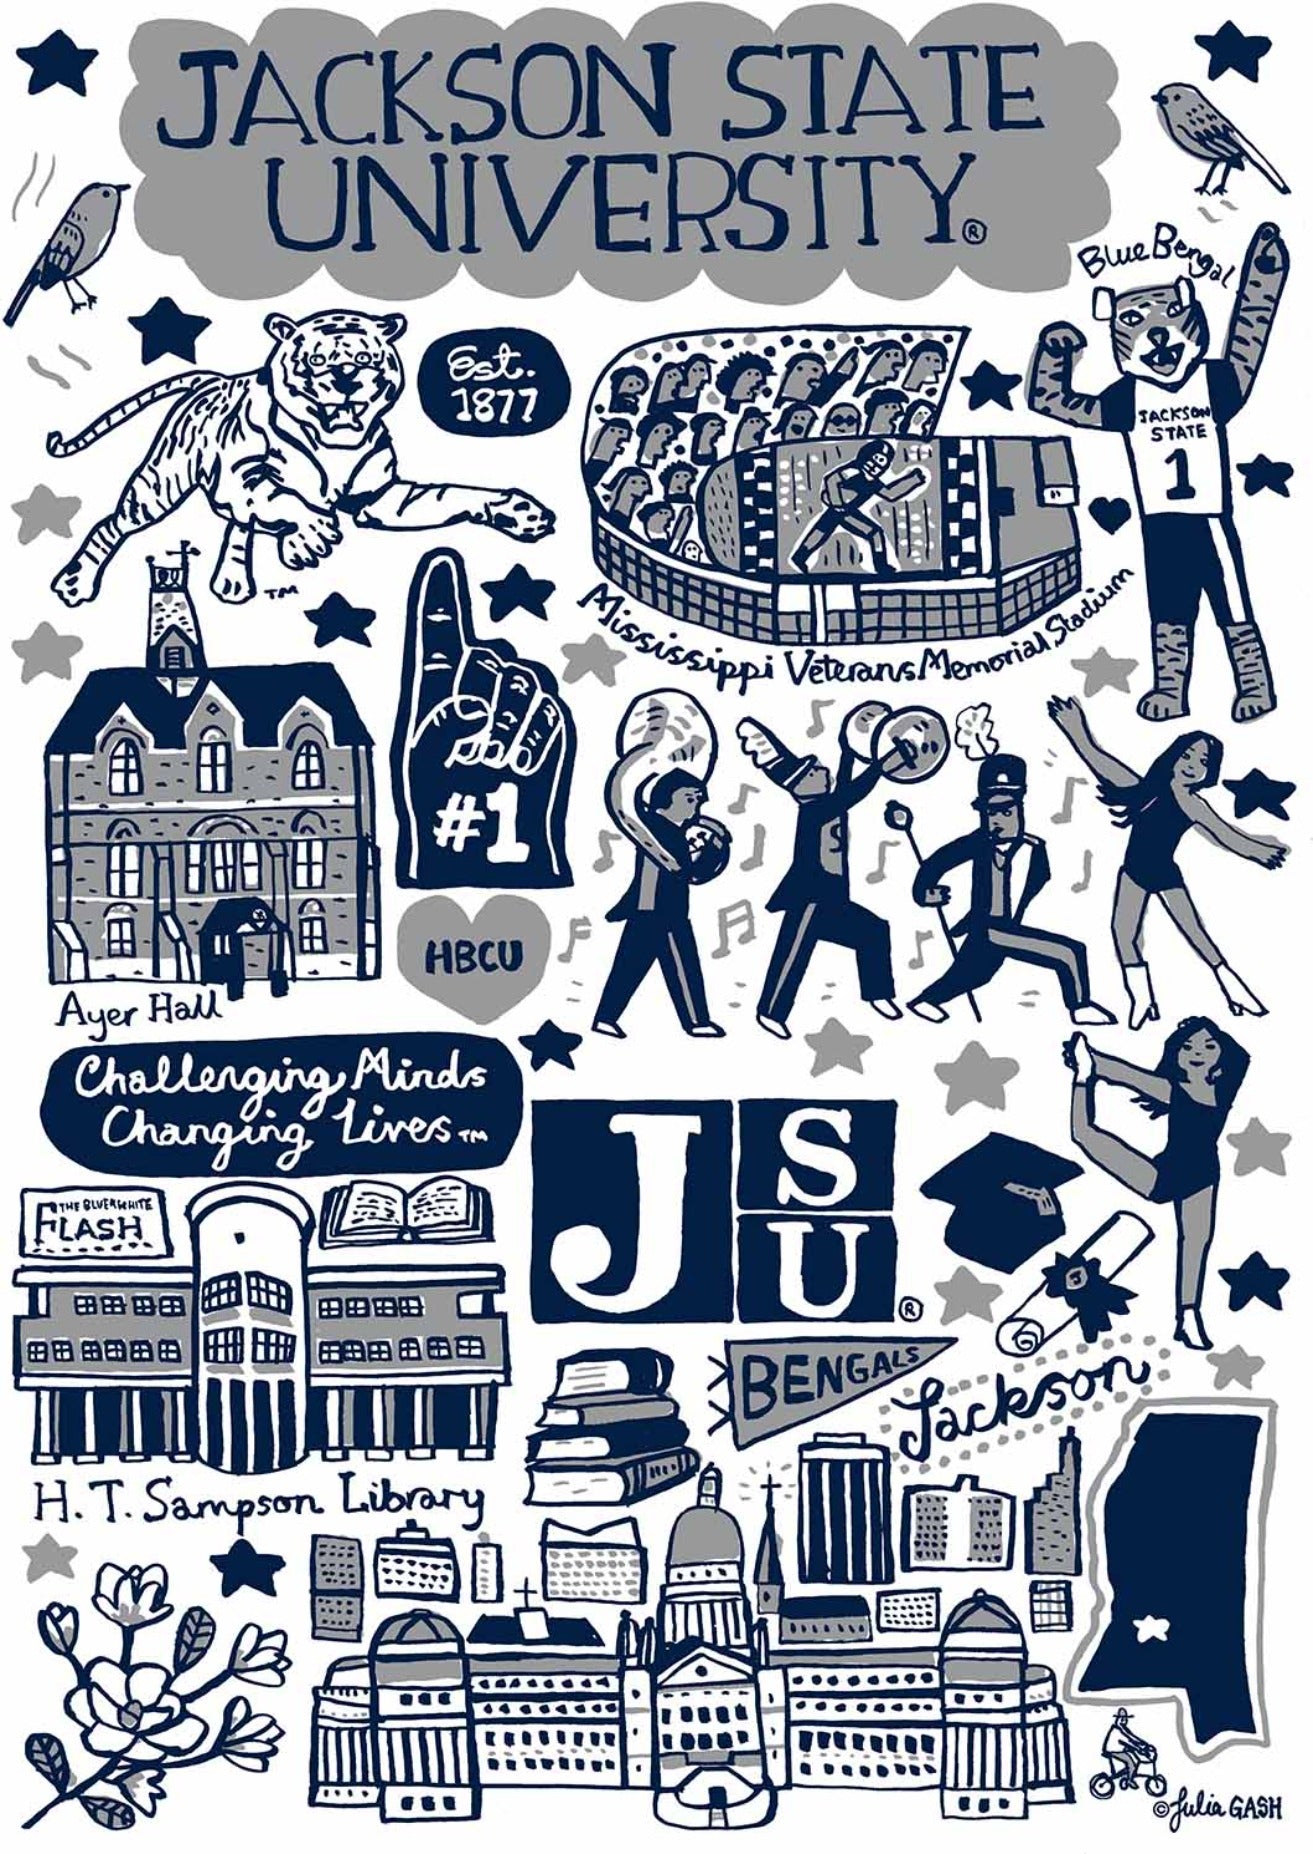 Jackson State University by Julia Gash